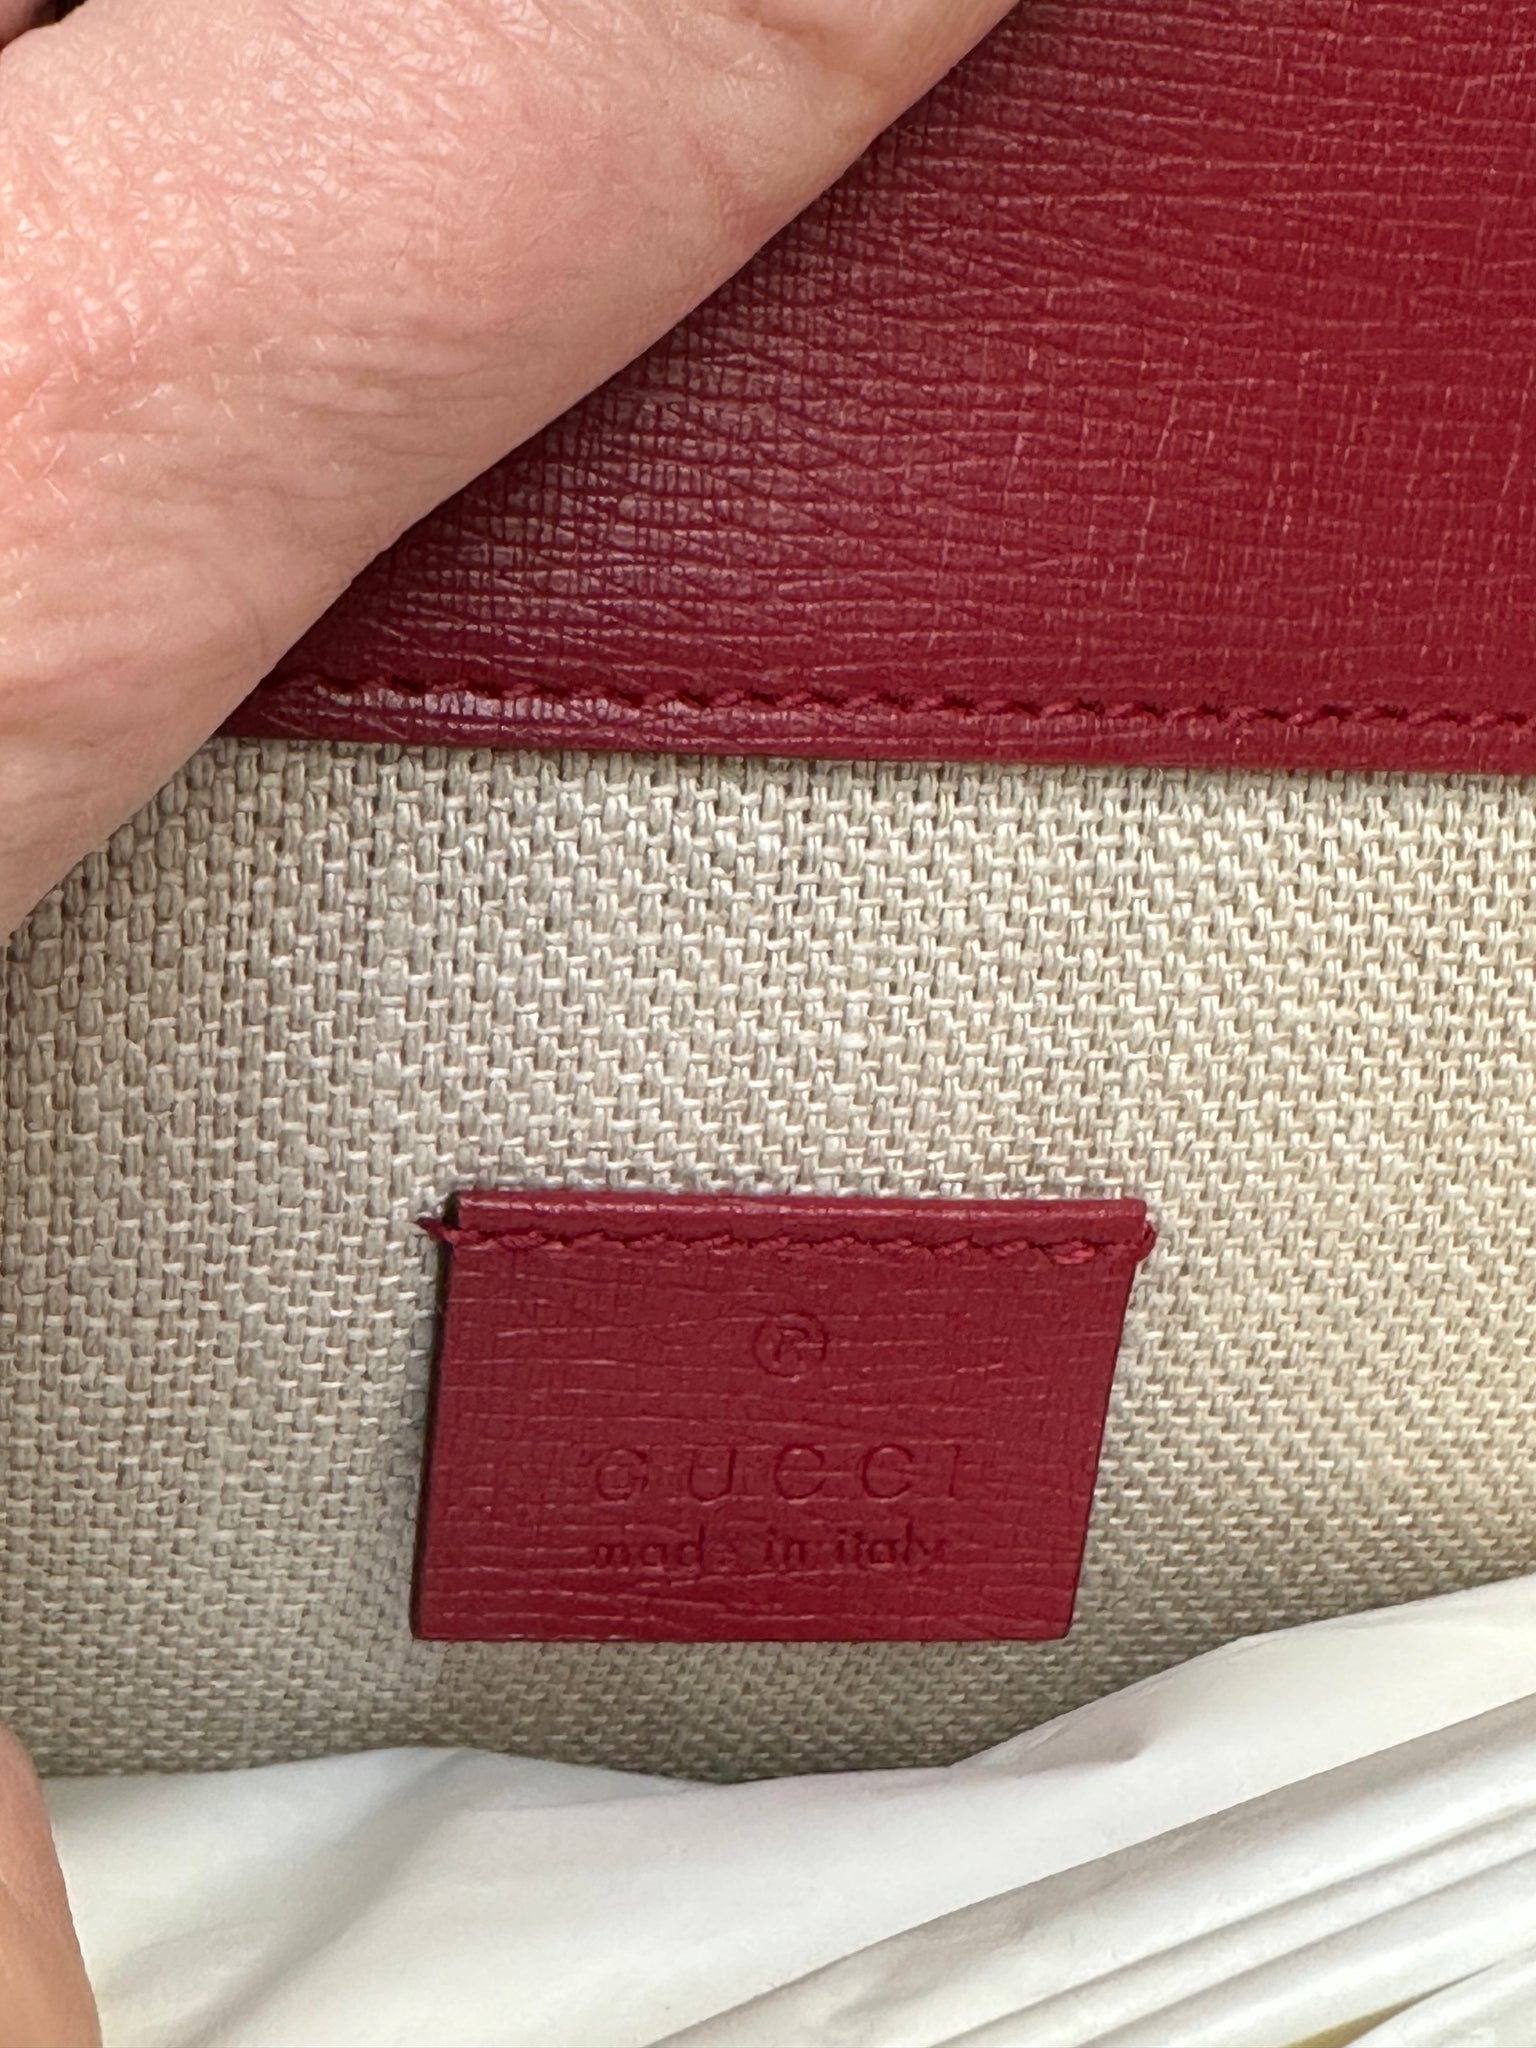 Gucci Dionysus Bag Blu and Red Leather Shoulder Bag